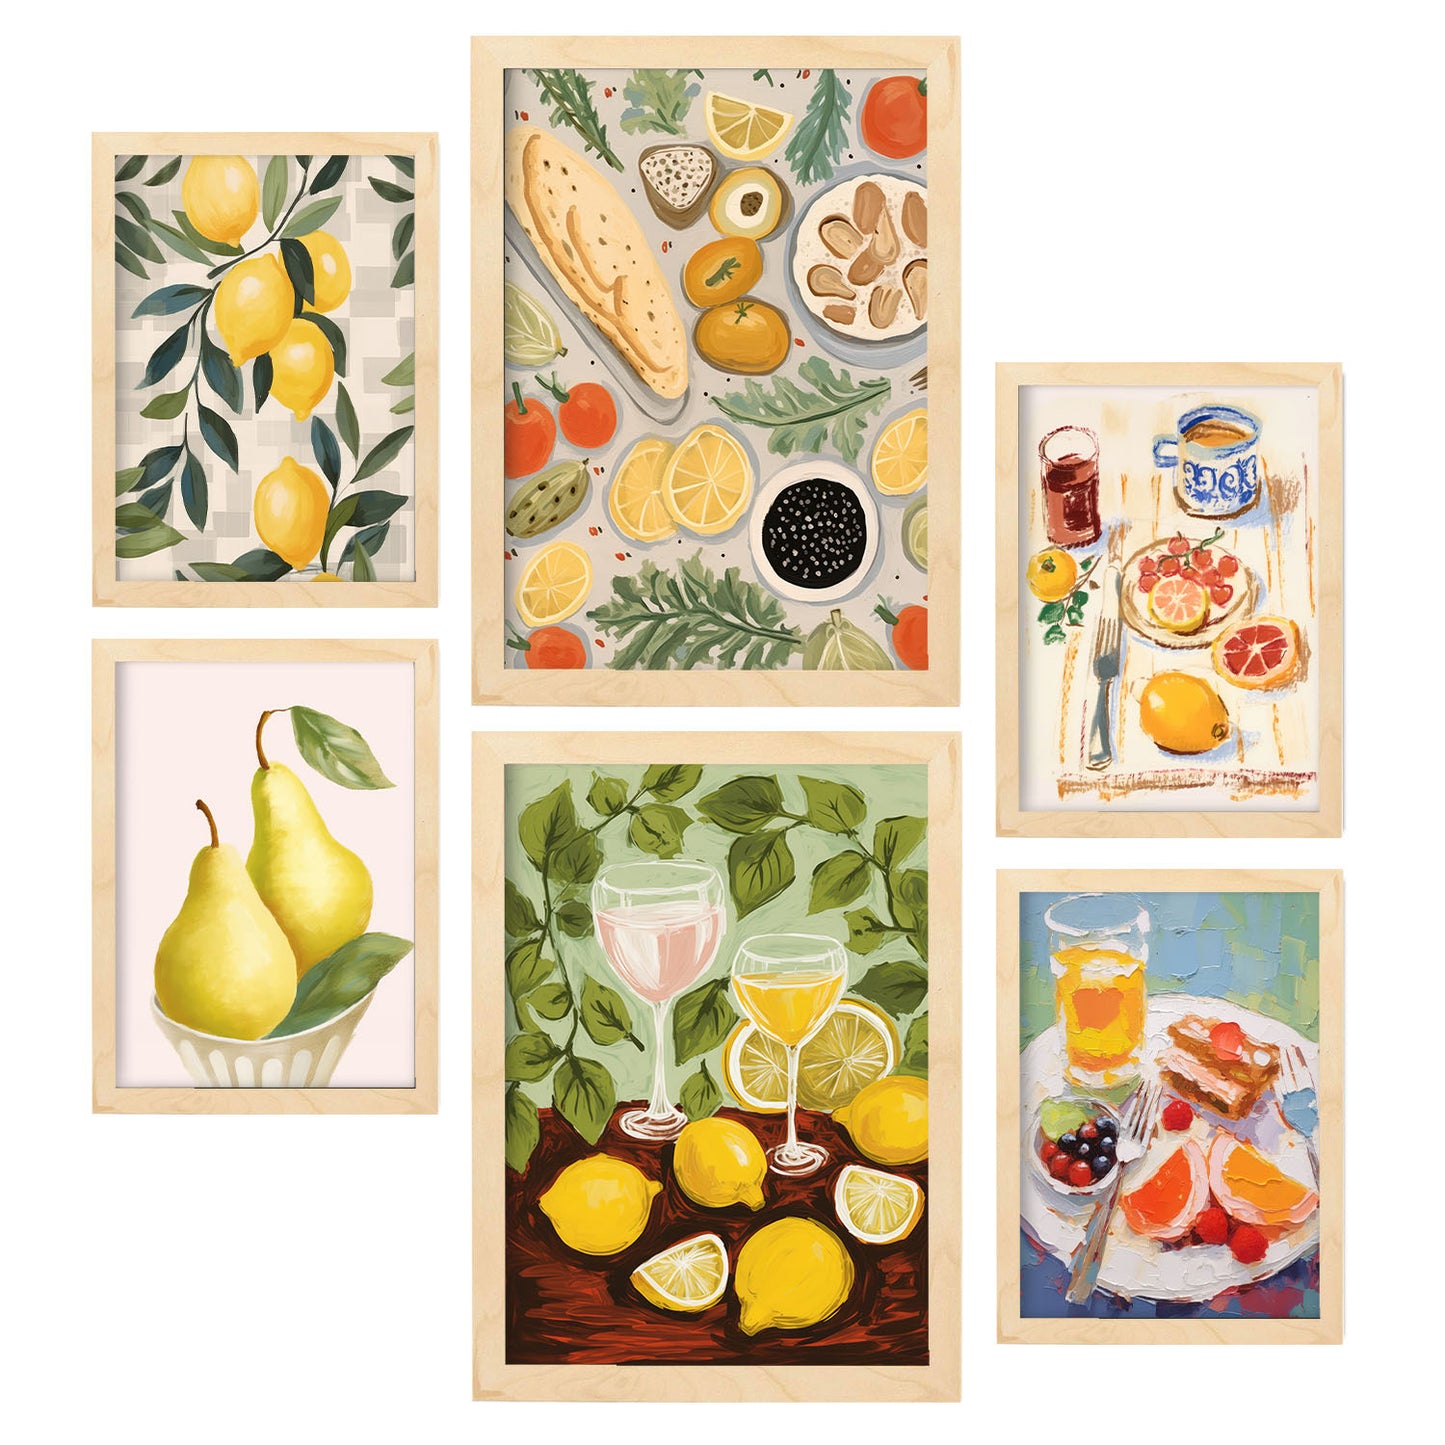 Nacnic Set de 6 Láminas de Limones y Mermelada para Amantes de la Comida